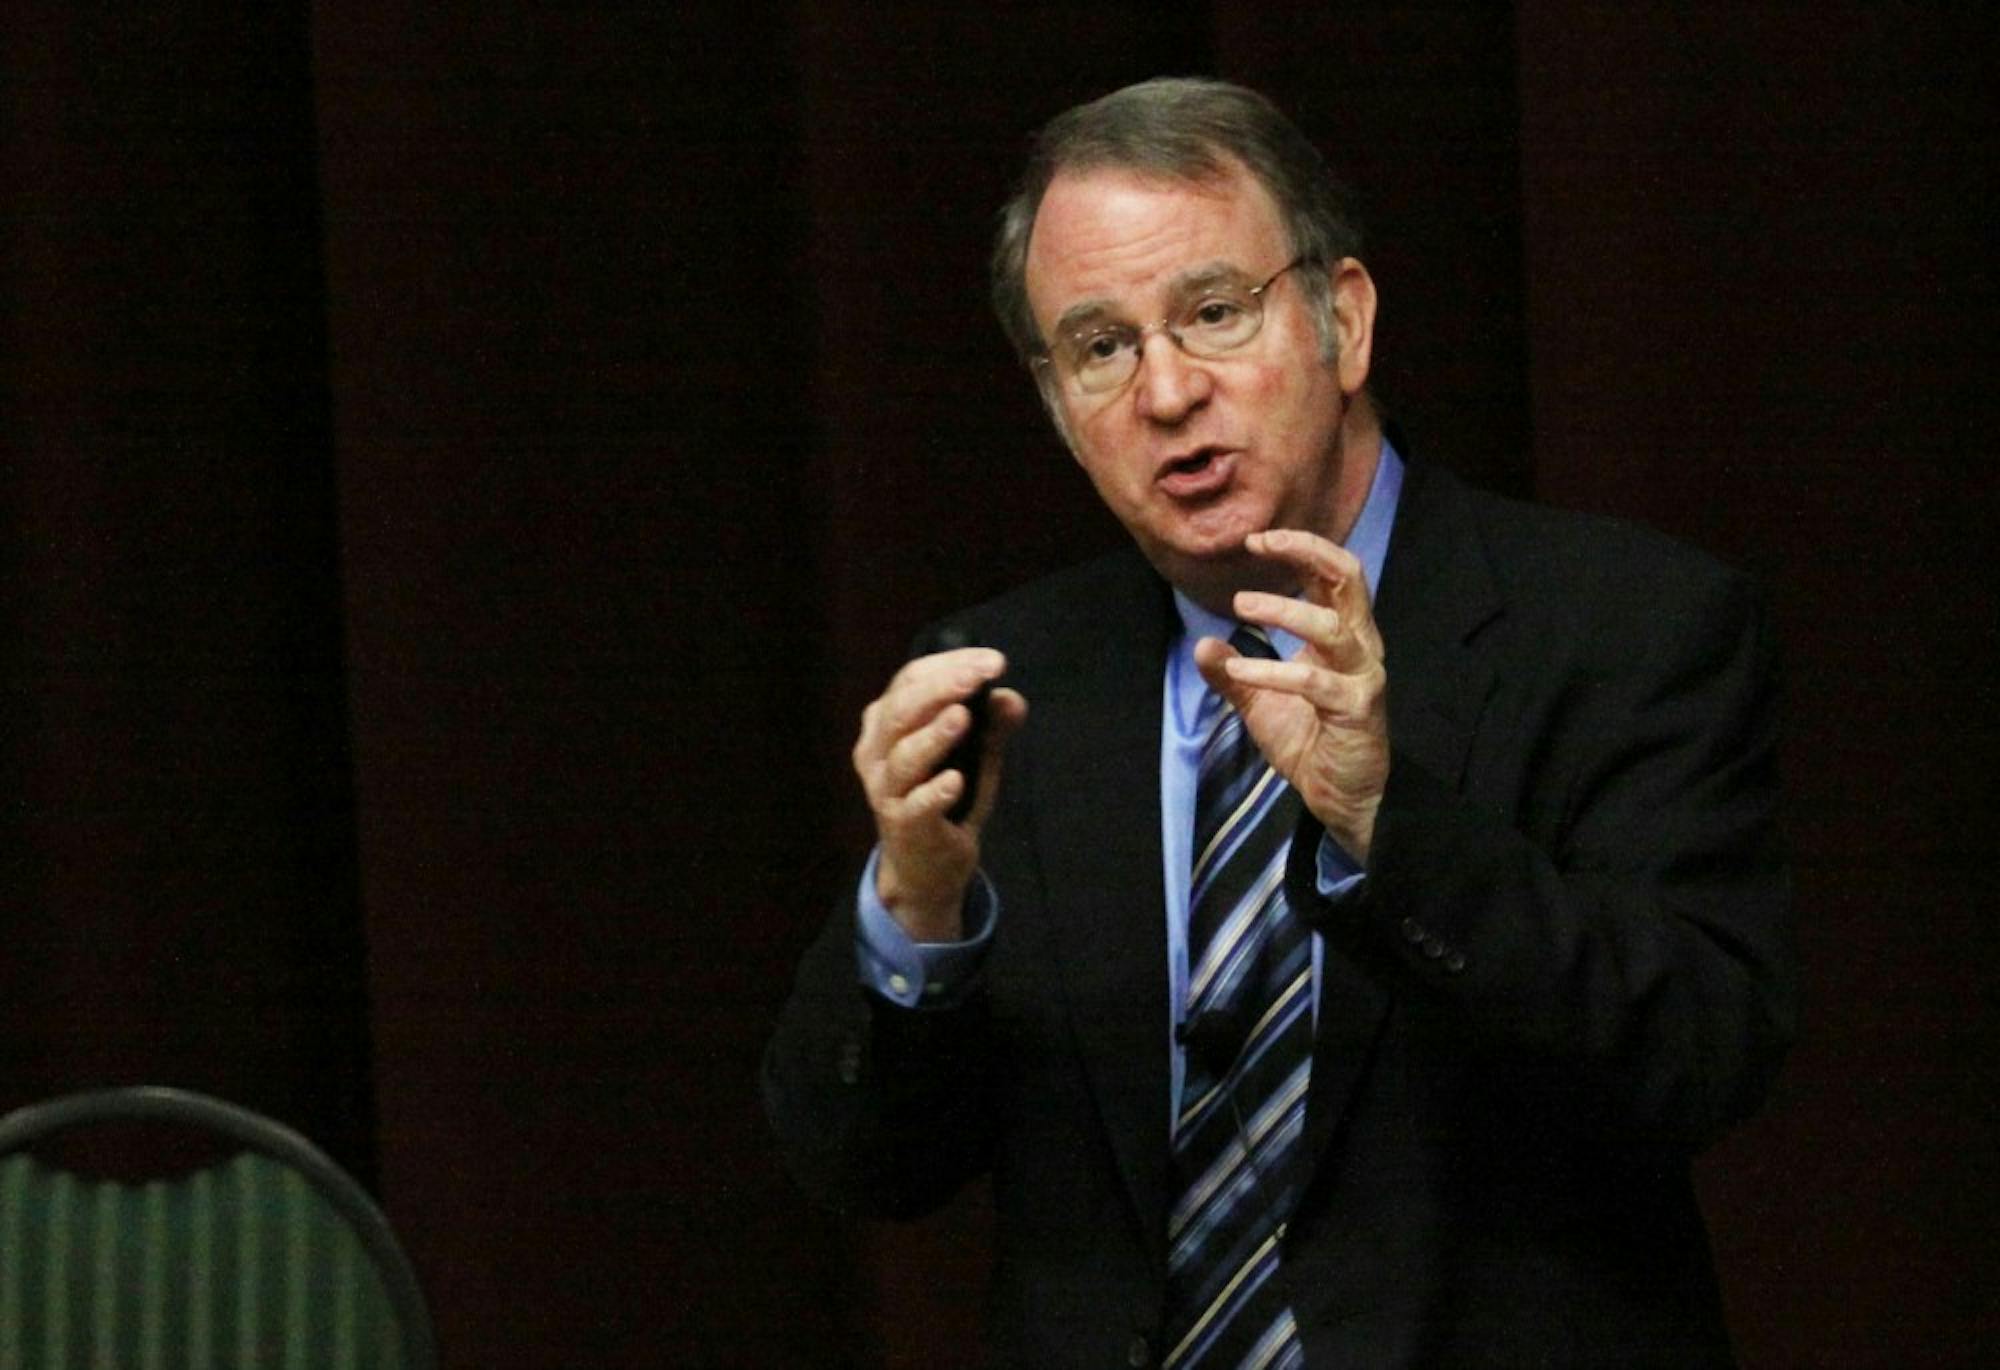 Charles Ballard a professor of economics at MSU discusses the state of Michigan's budget.